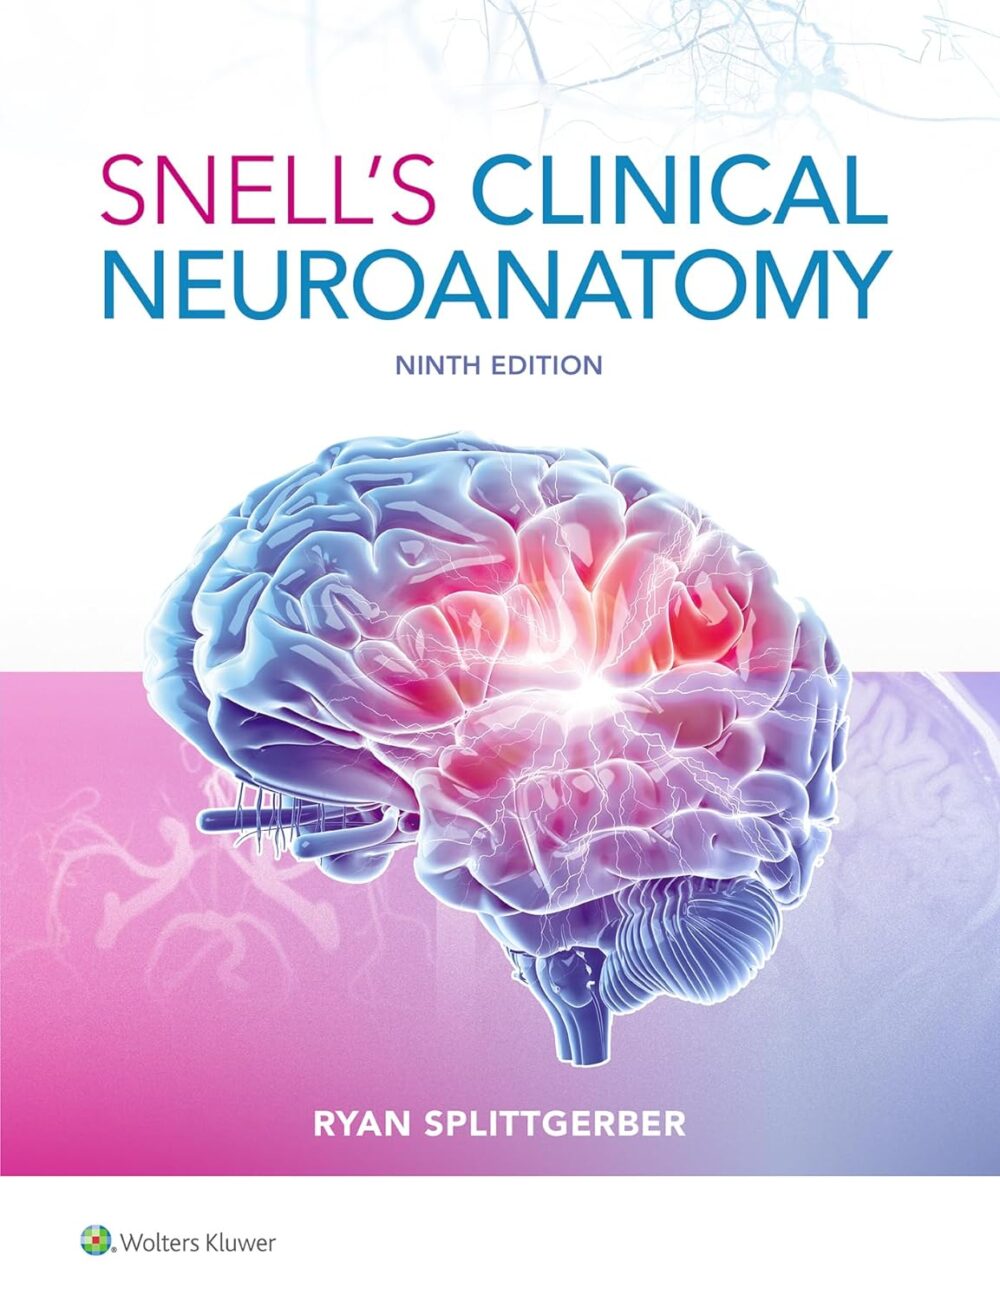 Neuroanatomia Clínica de Snell Nona Edição 9ª ed